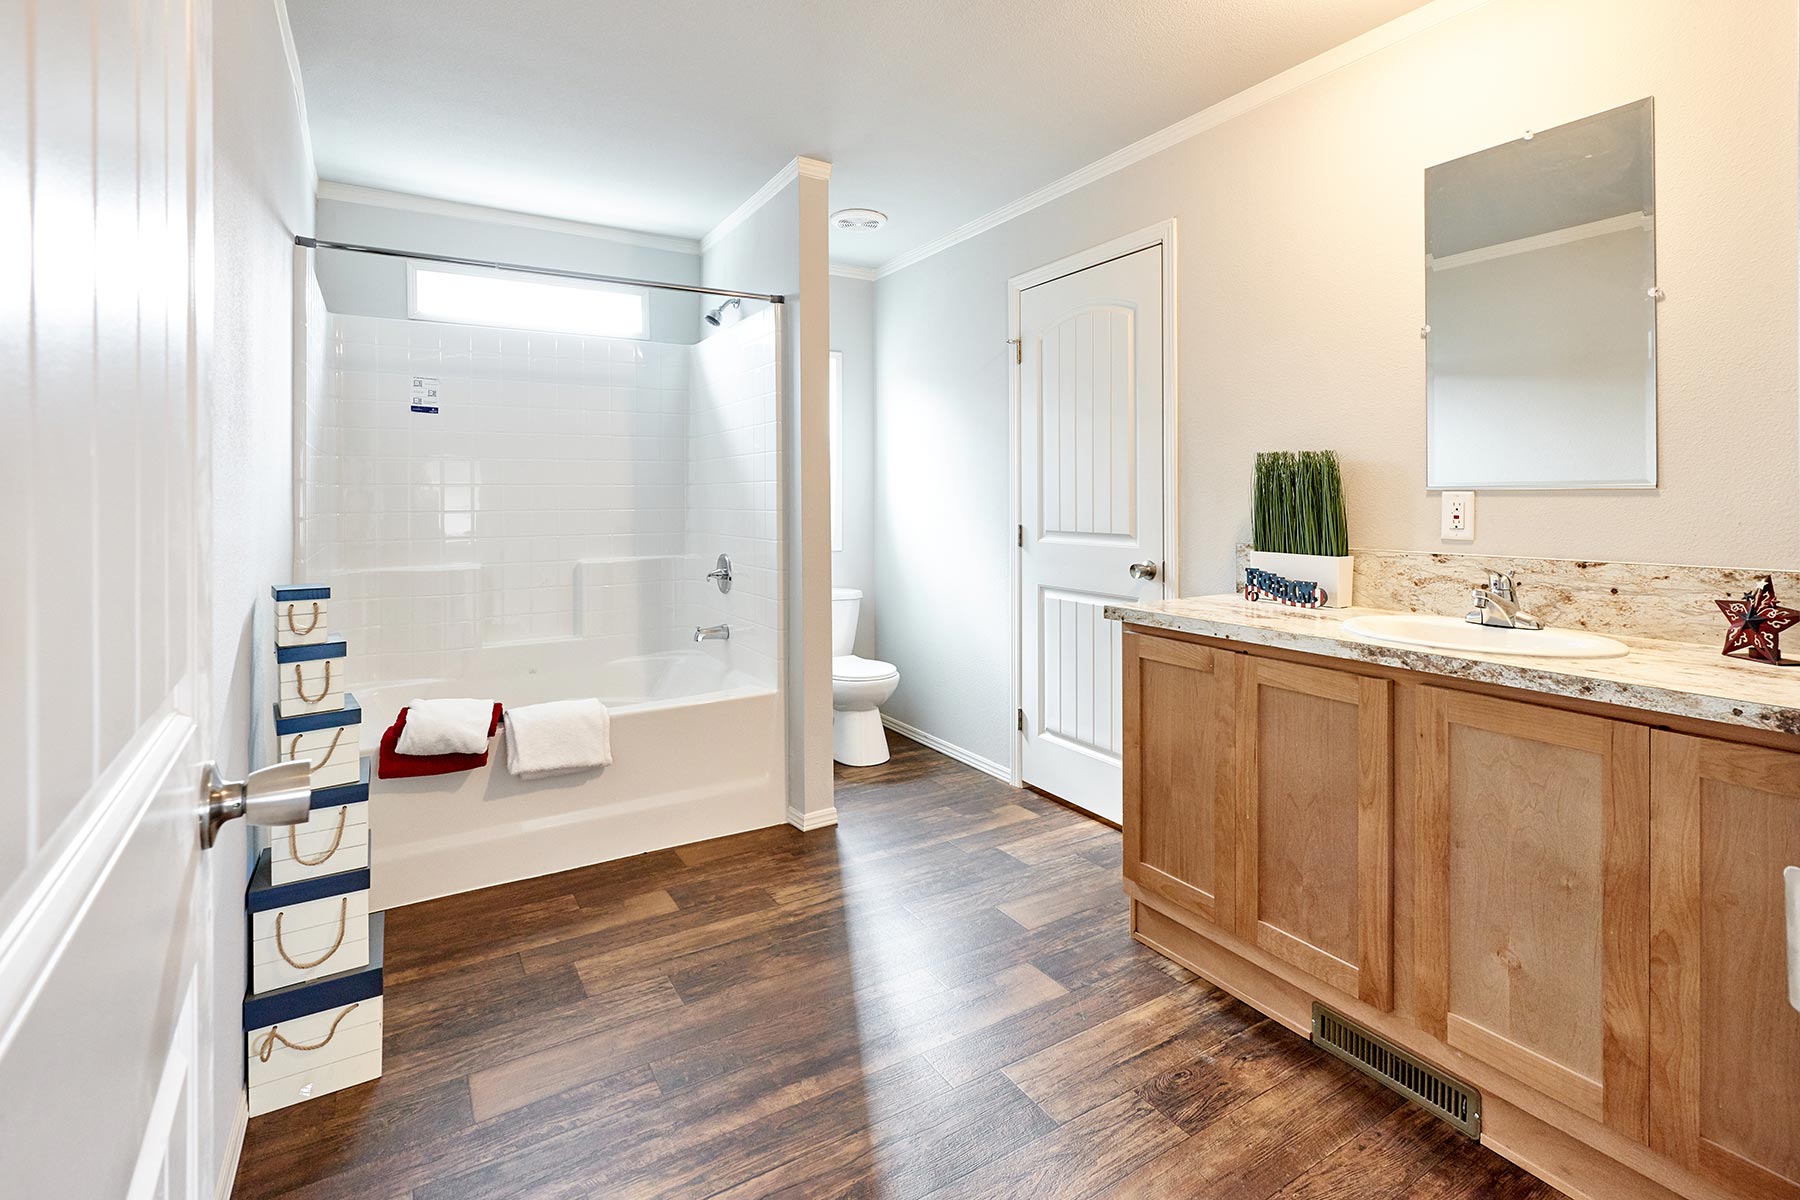 Skyline Homes Arlington G561 Manufactured Home Master bathroom featuring single vanity, shower bath, toilet, walk-in closet